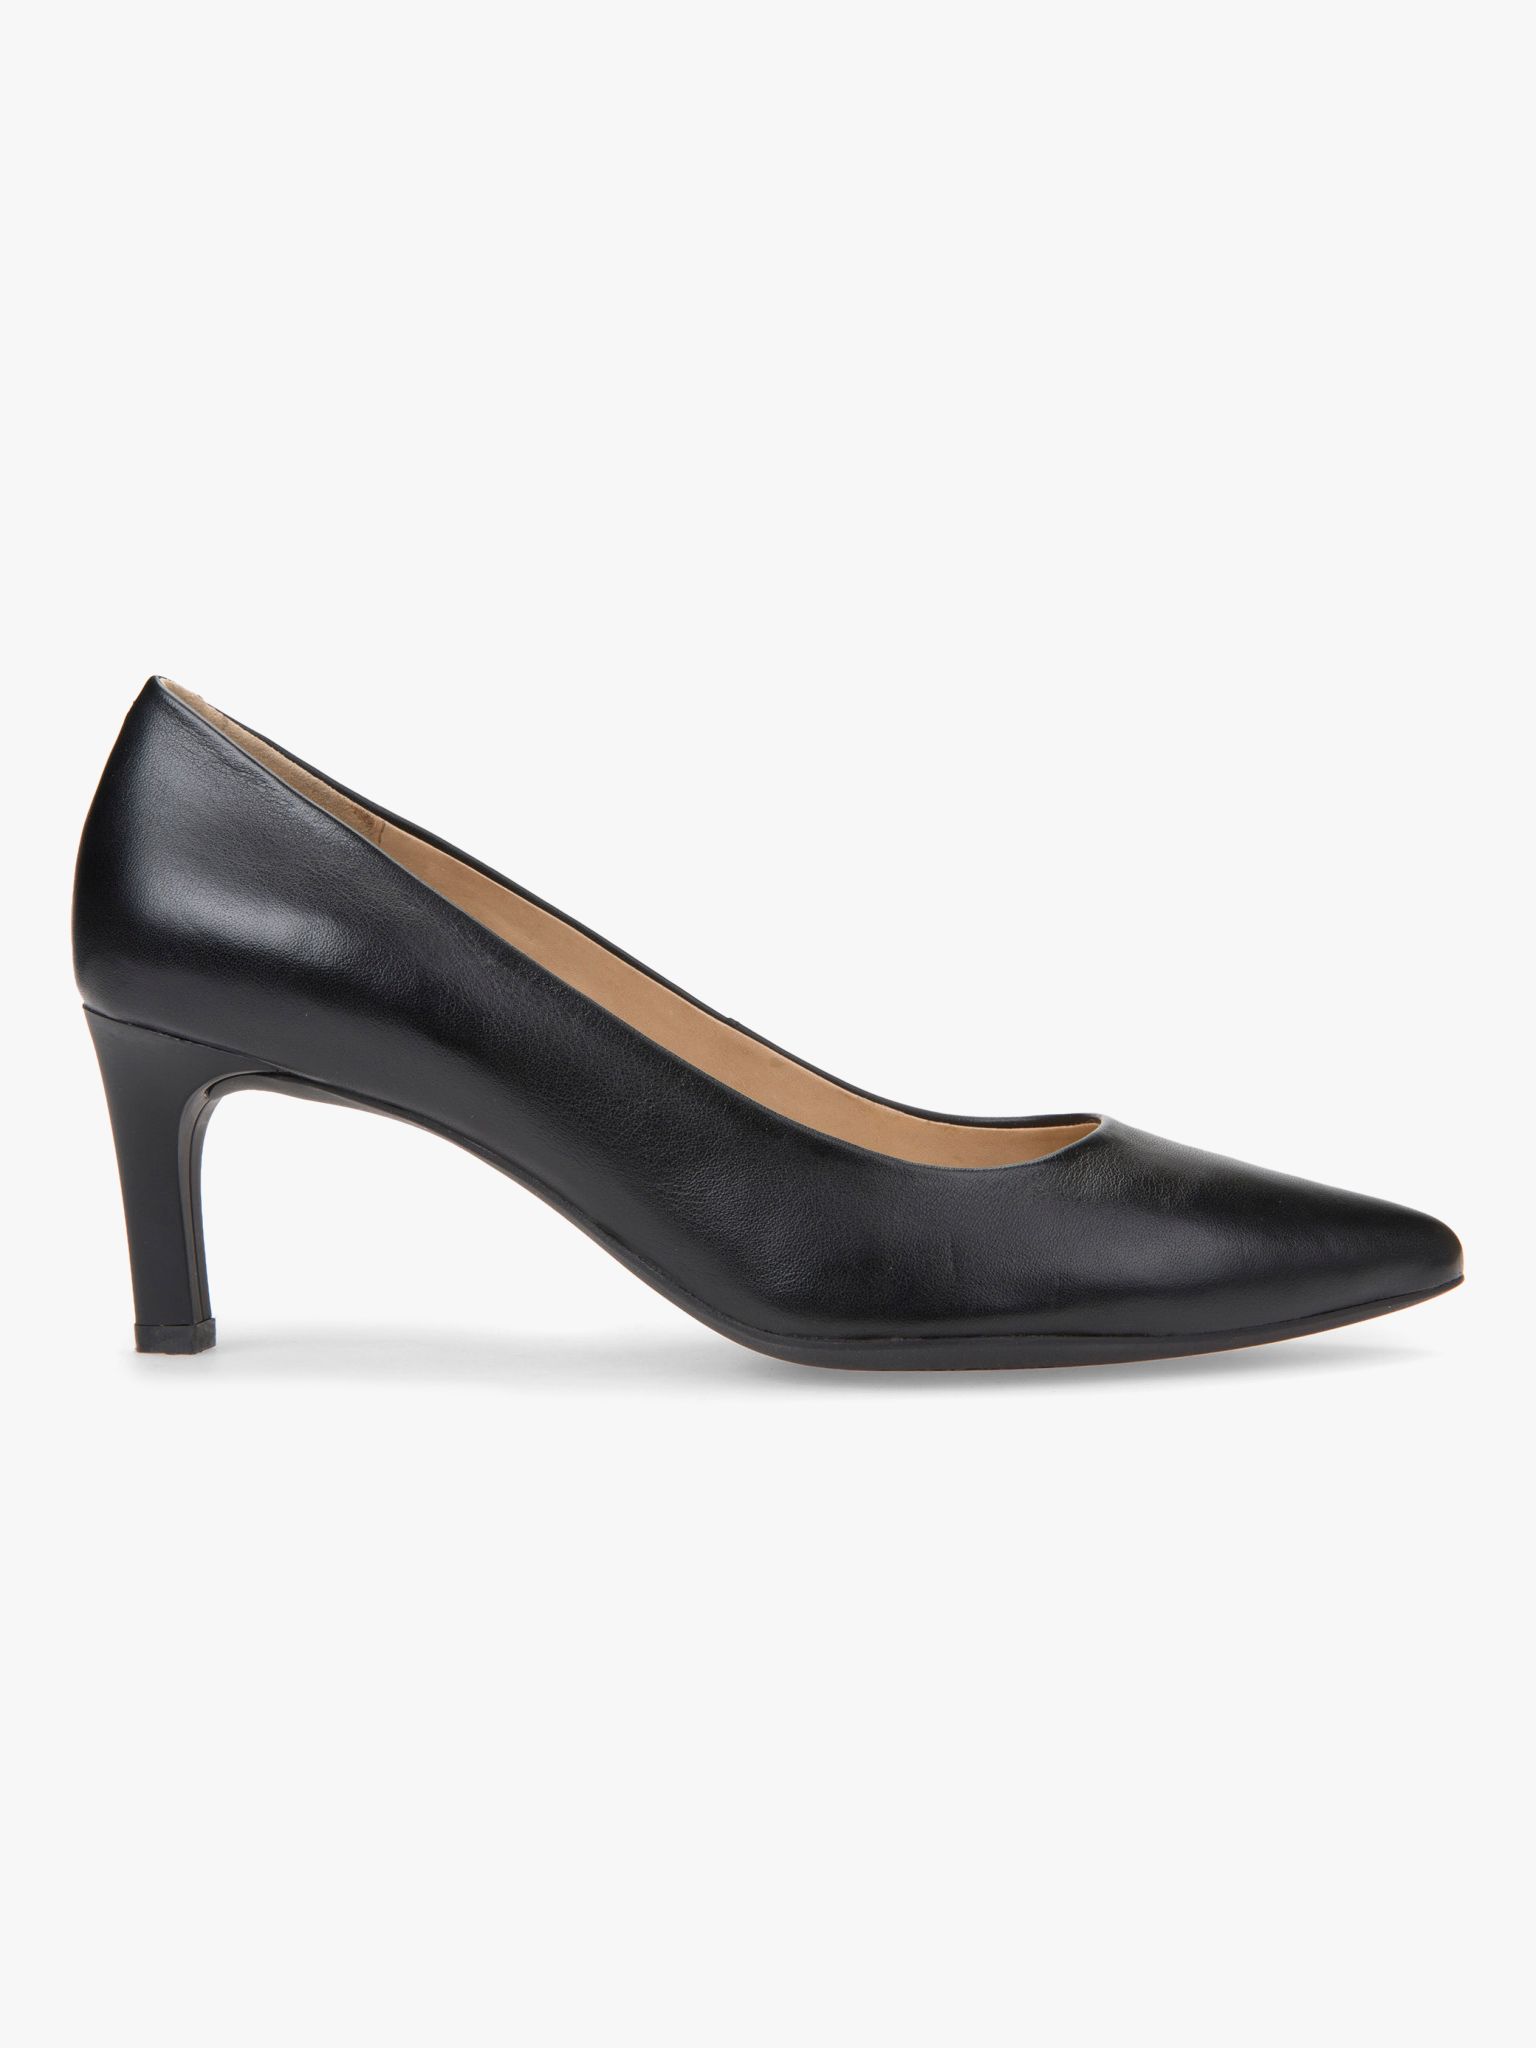 Geox Bibbiana Stiletto Heeled Court Shoes, Black Leather